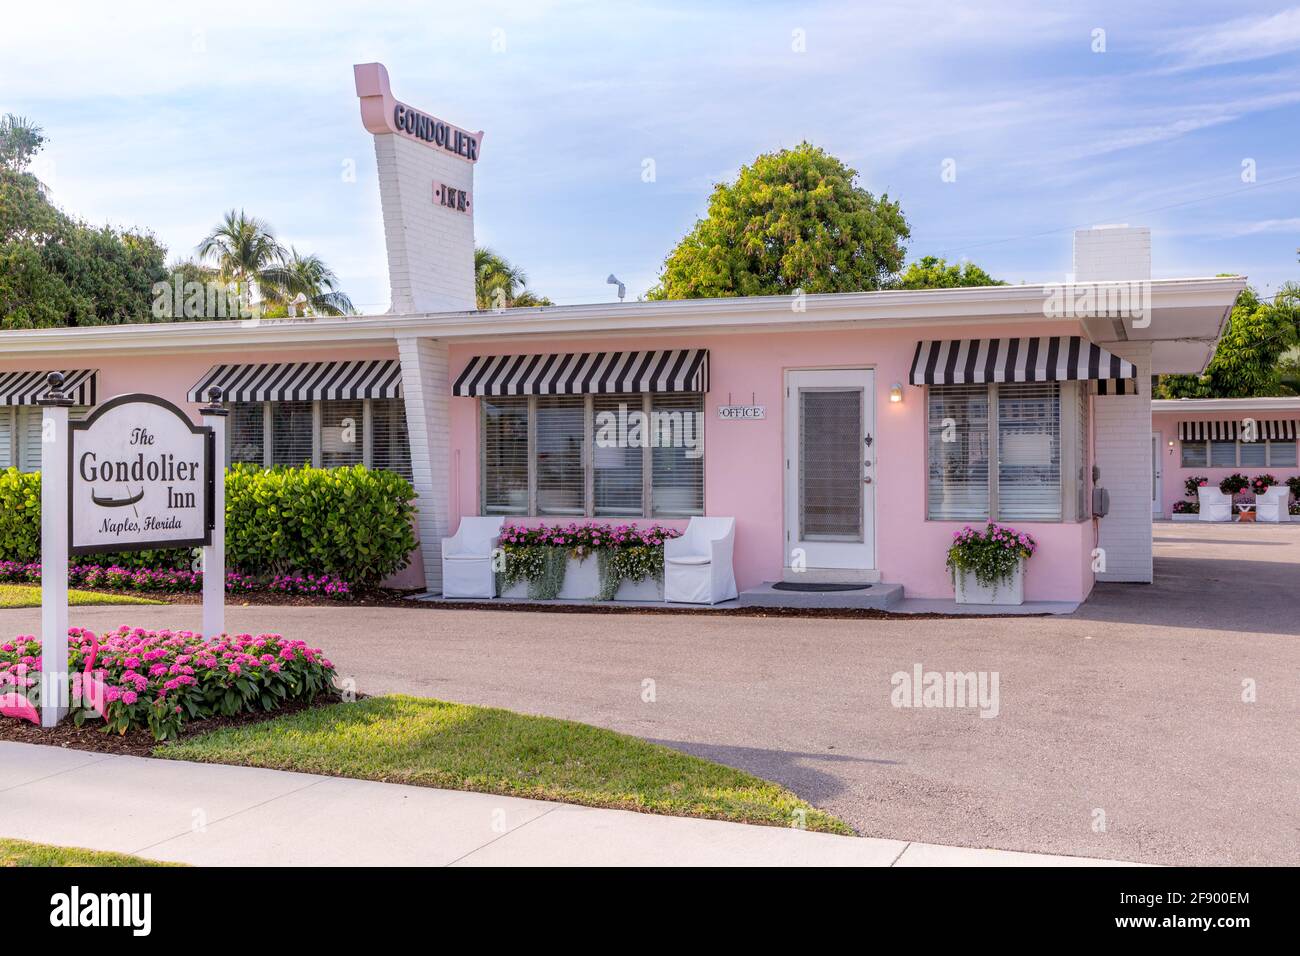 The Gondolier Inn - b. 1958, an upscale classic 50's style motel, Naples, Florida, USA Stock Photo